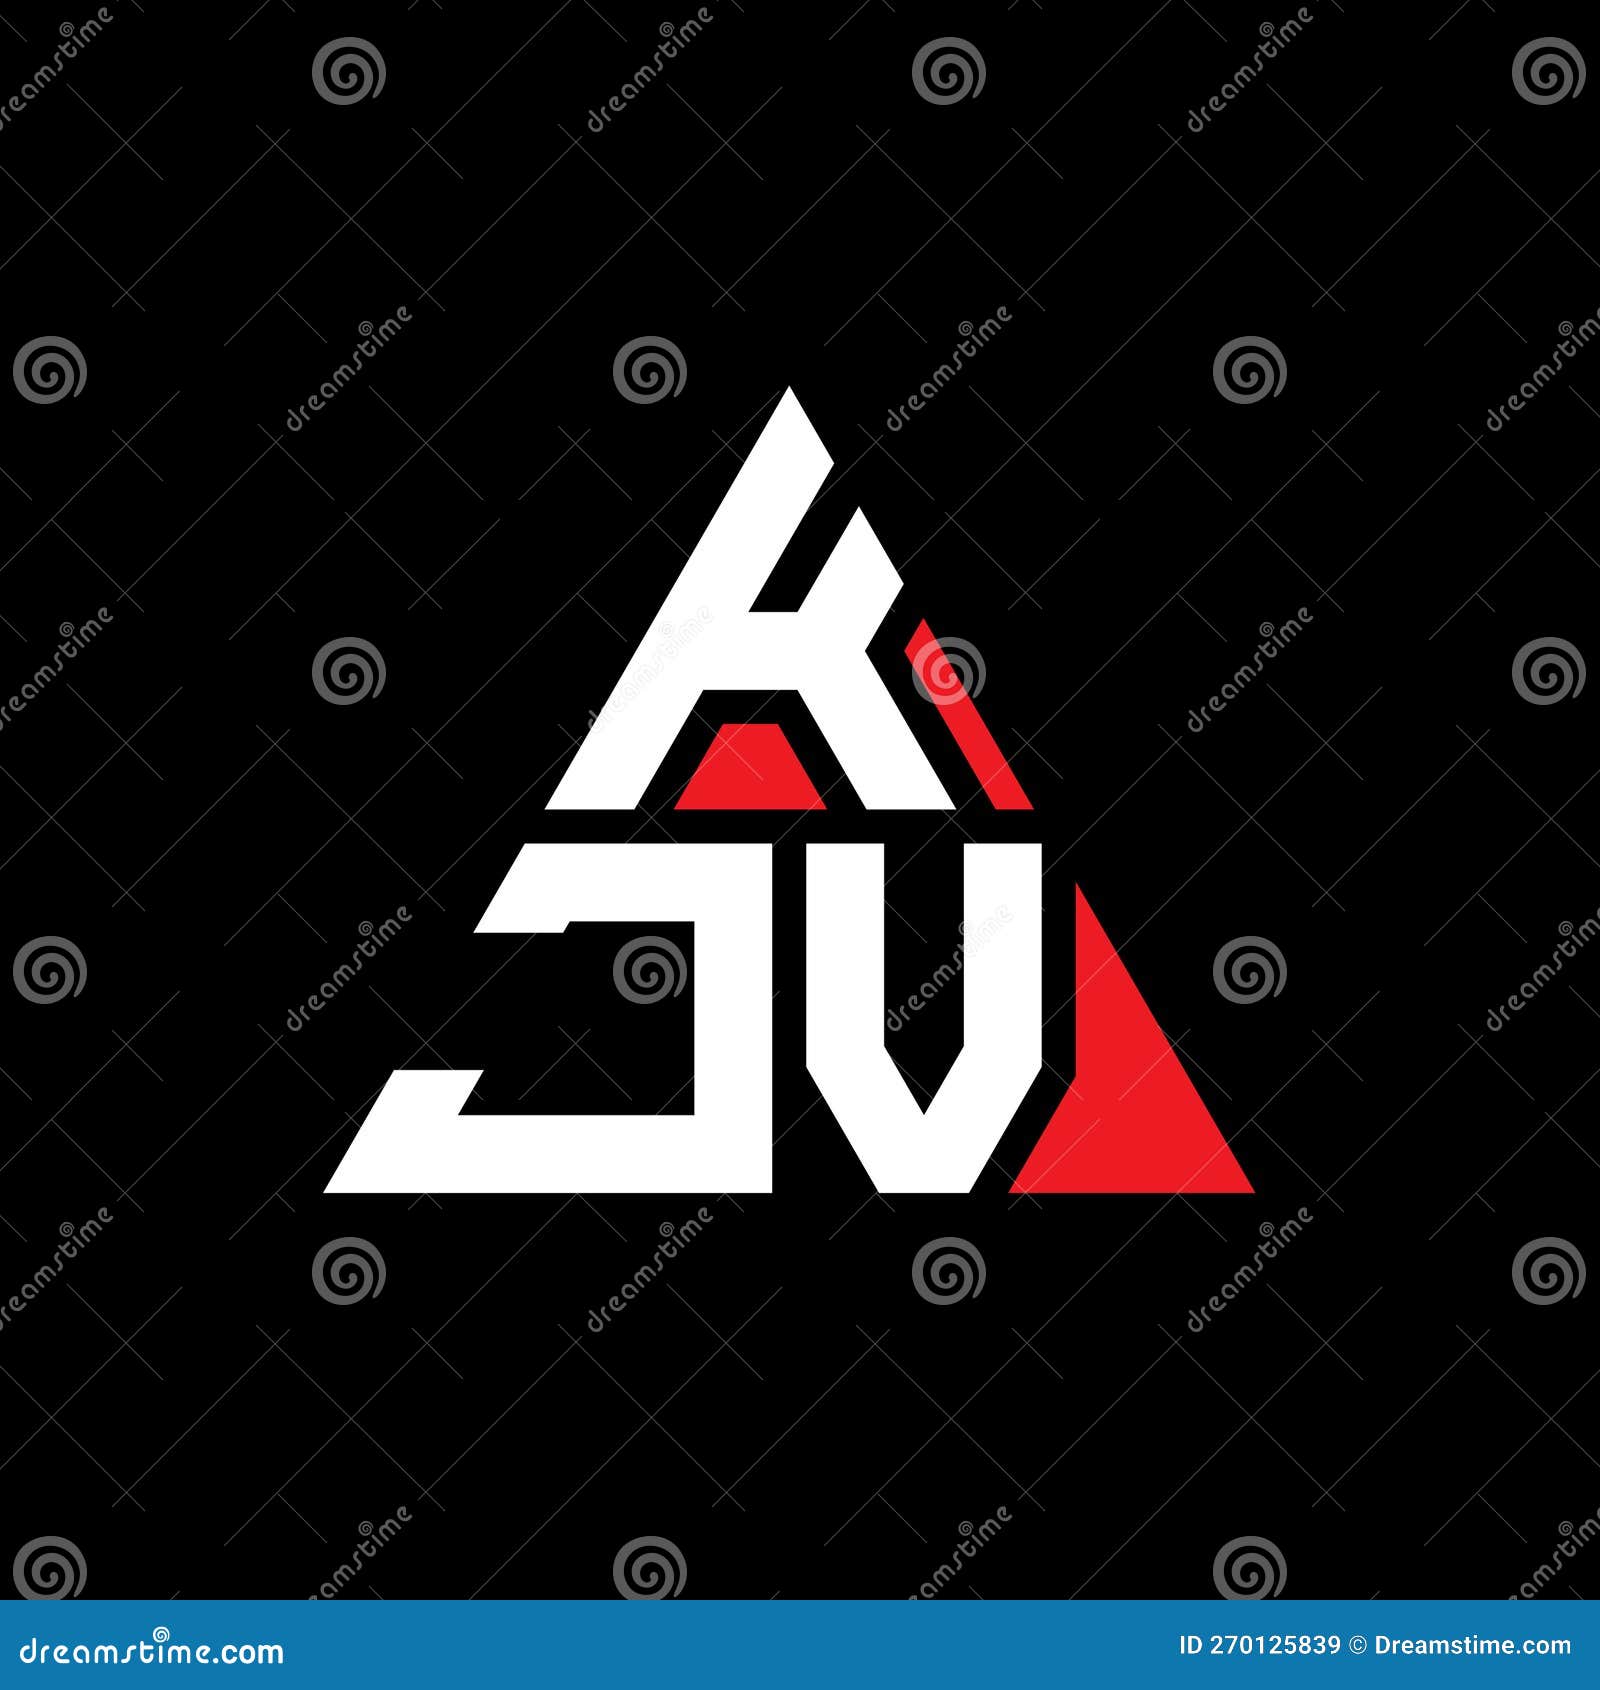 kjv triangle letter logo  with triangle . kjv triangle logo  monogram. kjv triangle  logo template with red